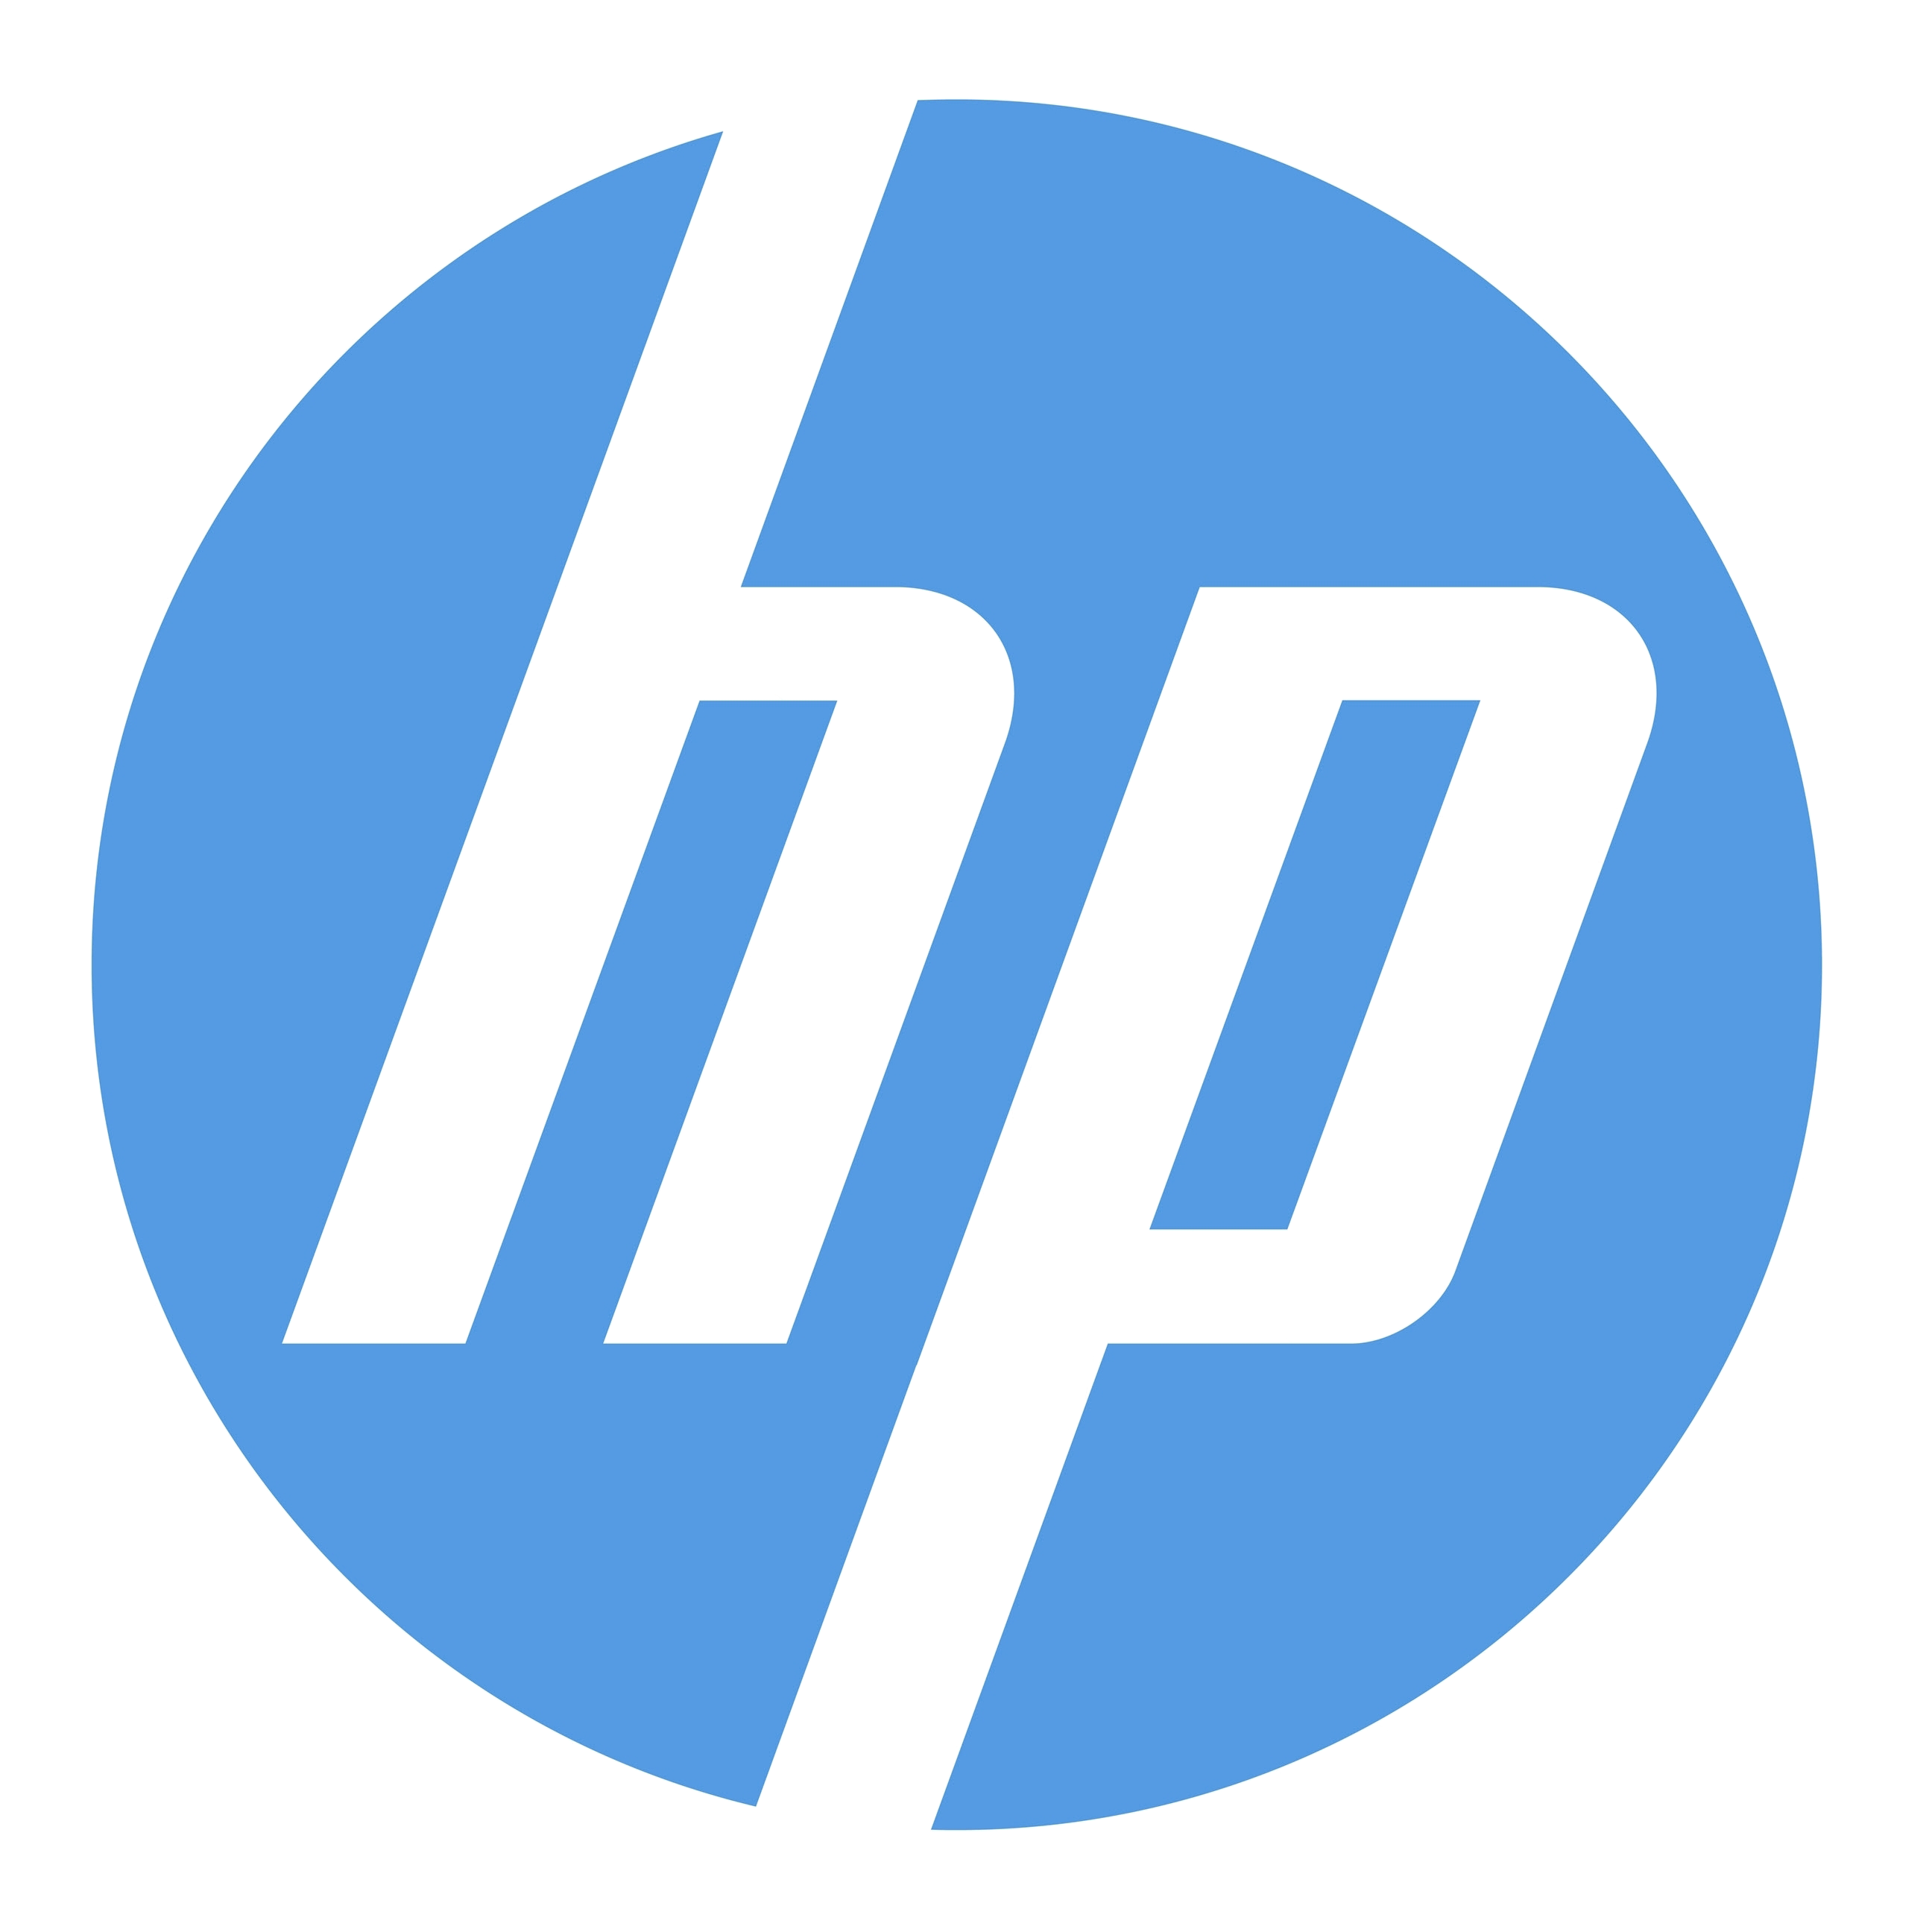 HP-logo PNG-afbeelding - PurePNG | Gratis transparante CC0 PNG-afbeeldingsbibliotheek